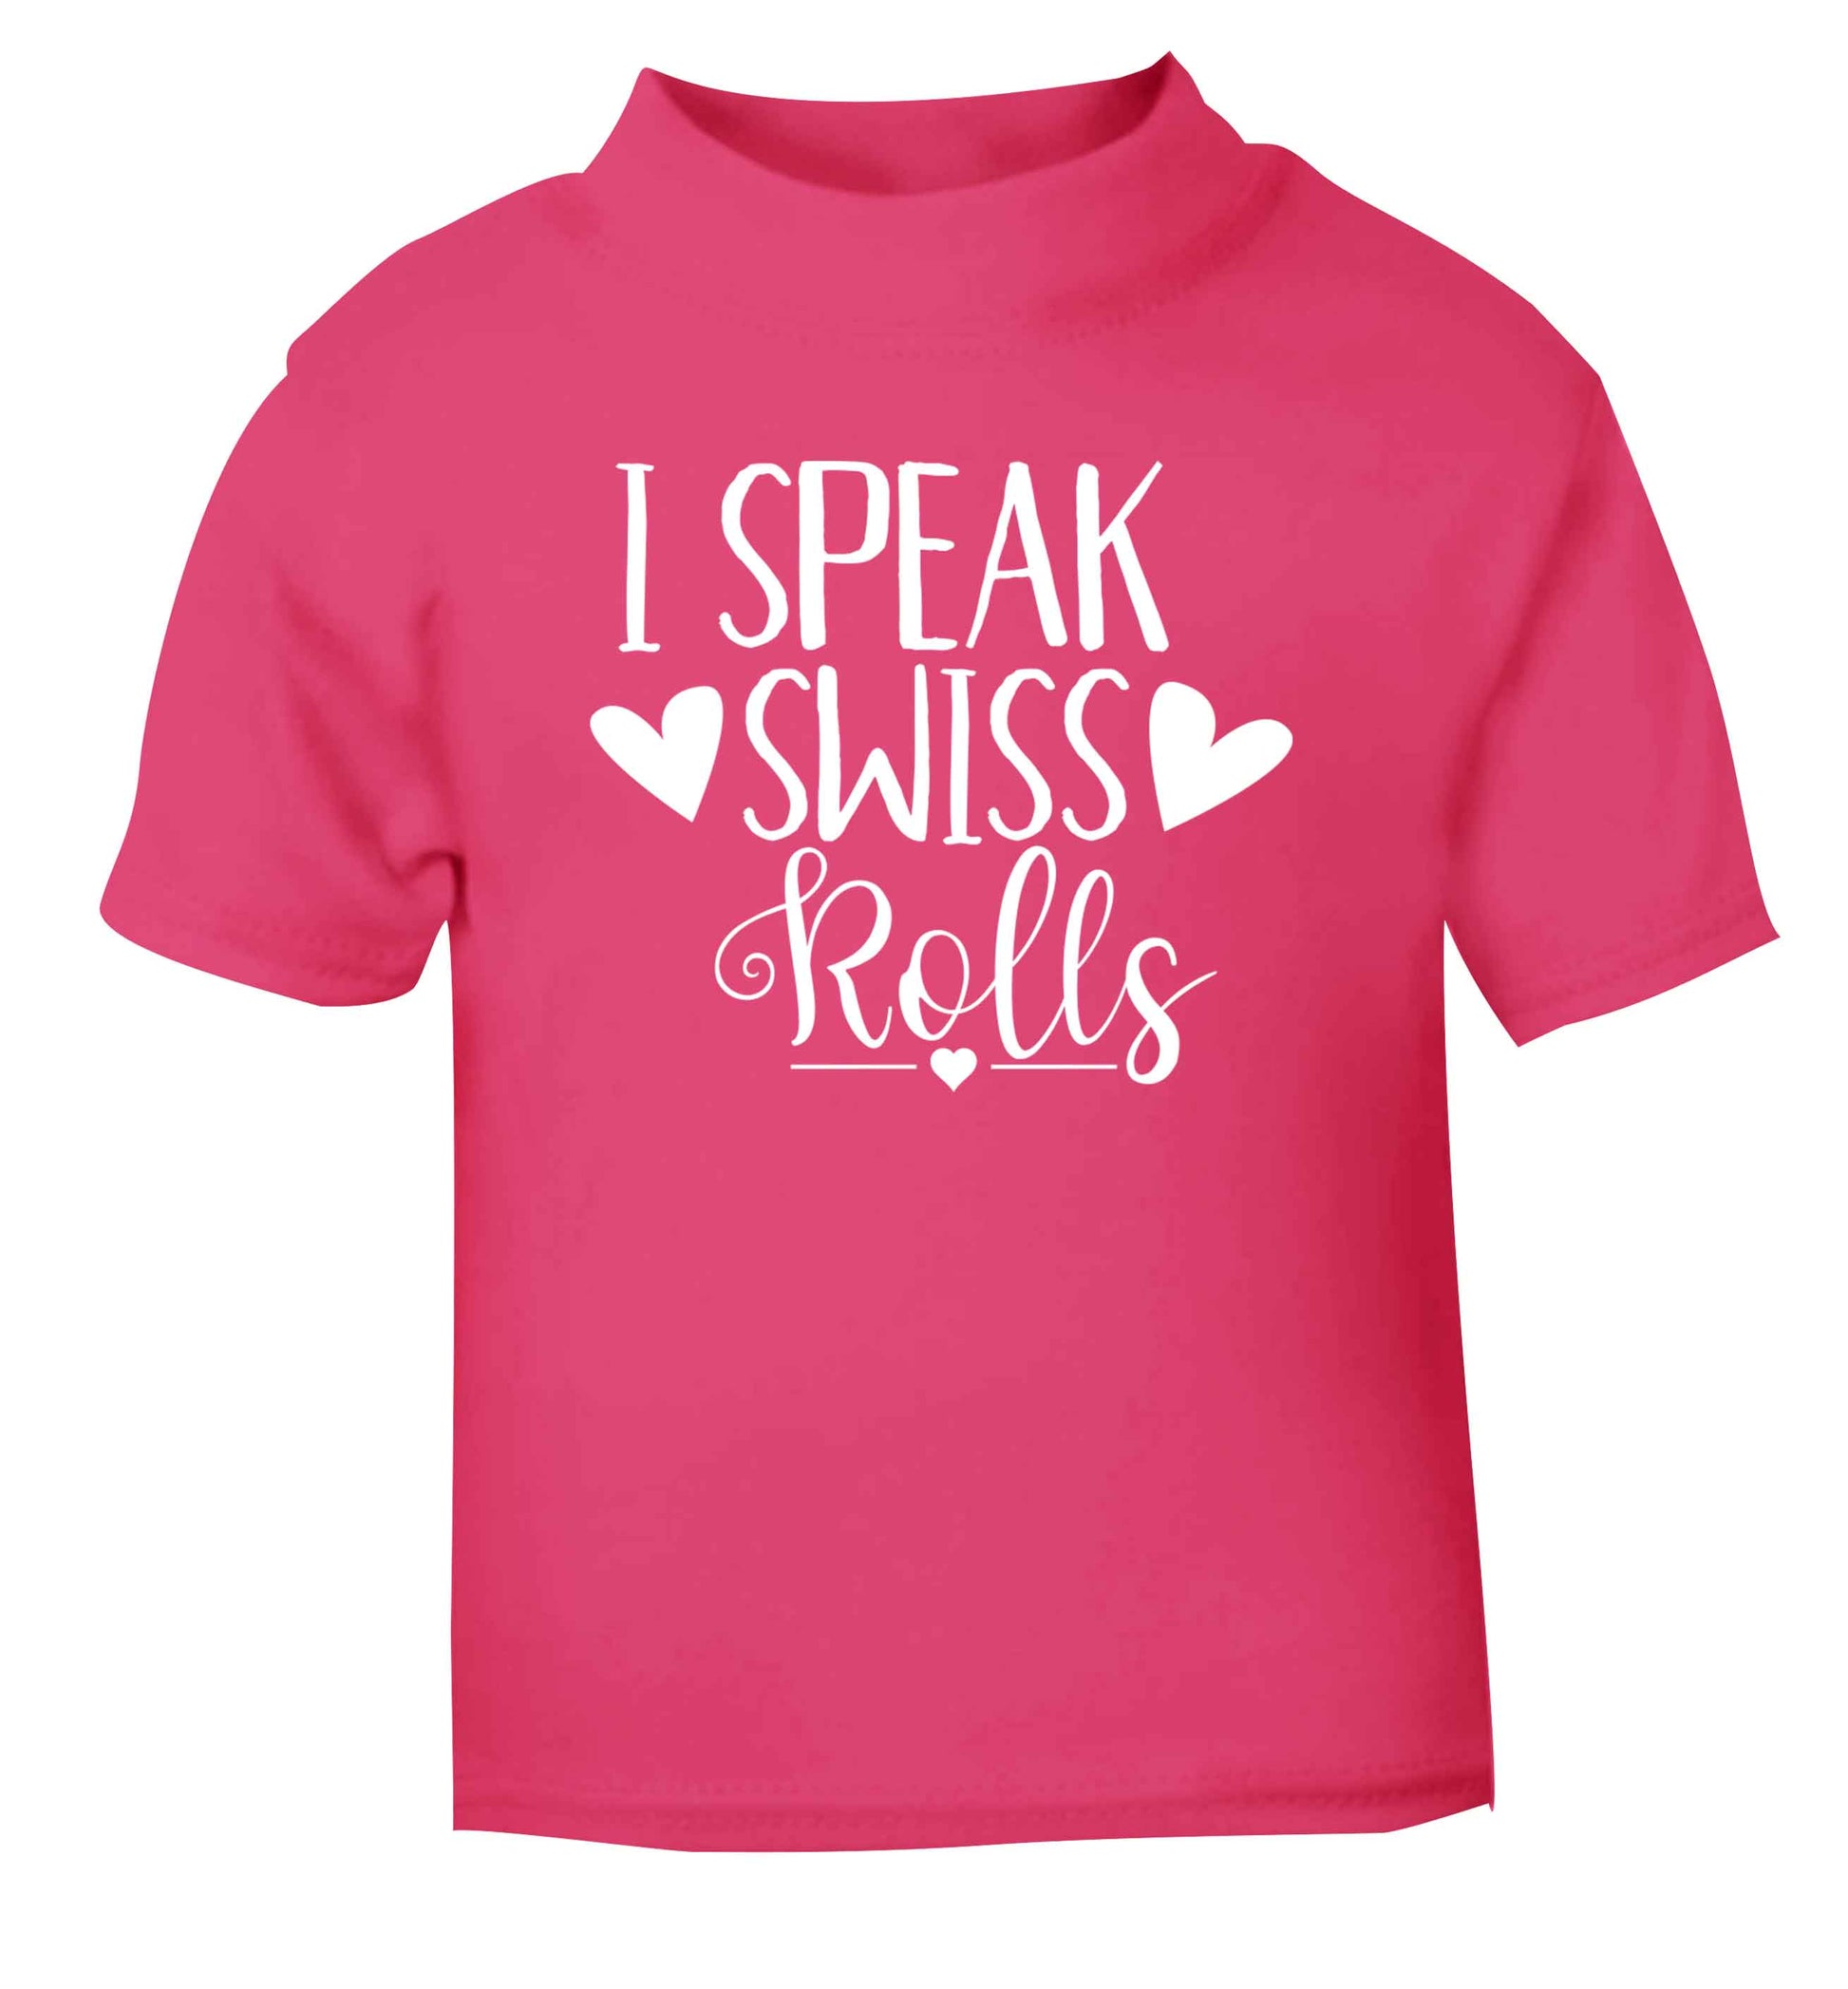 I speak swiss..rolls pink Baby Toddler Tshirt 2 Years